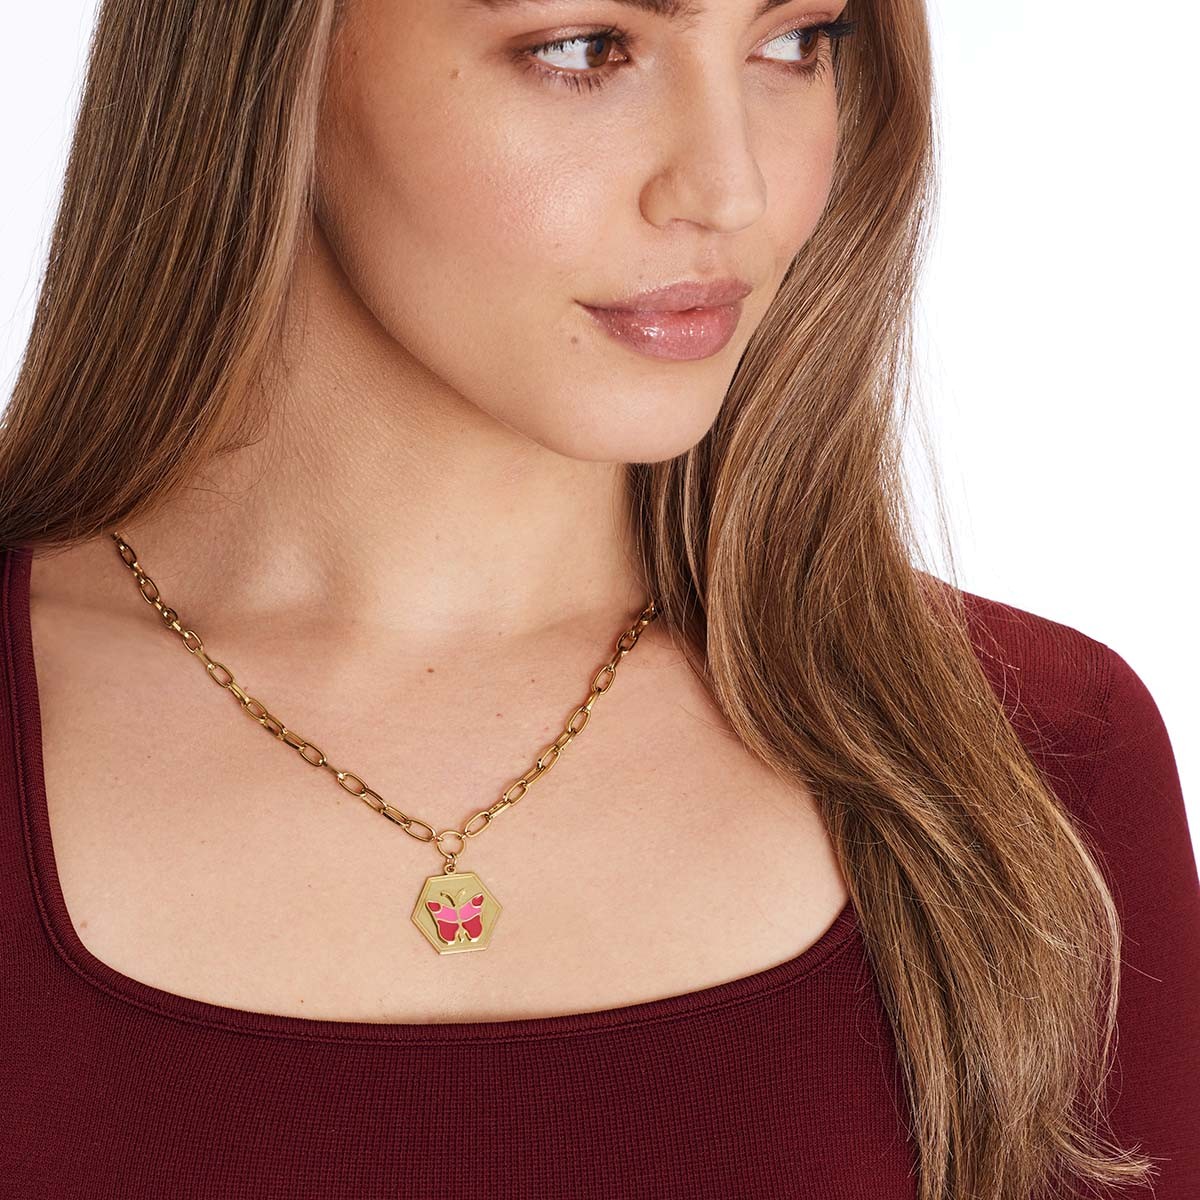 Fire Butterfly Pink - Halsketten - 18k vergoldet